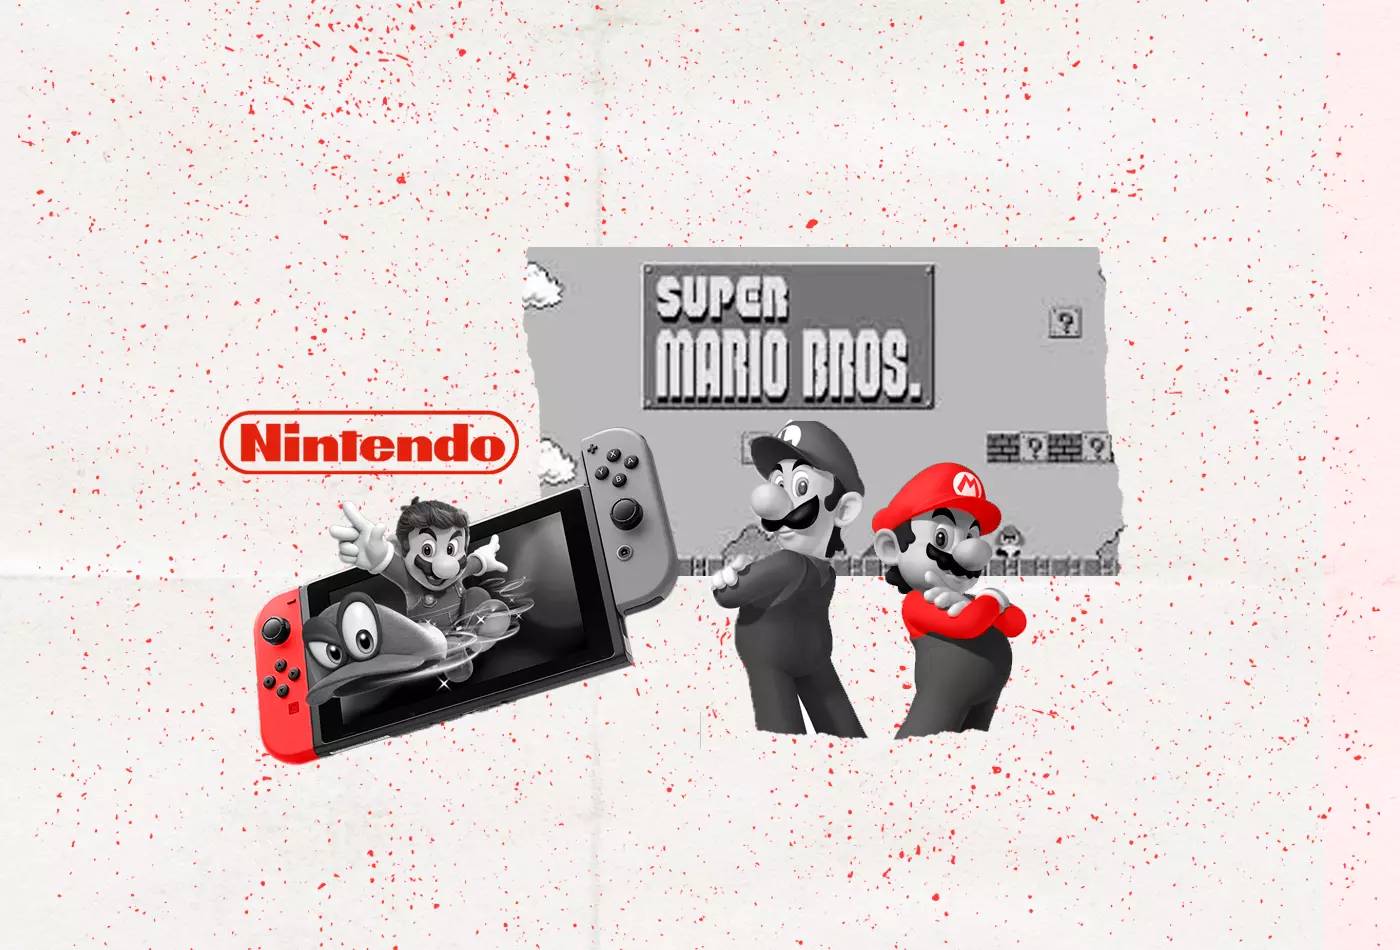 Nintendo Marketed Mario